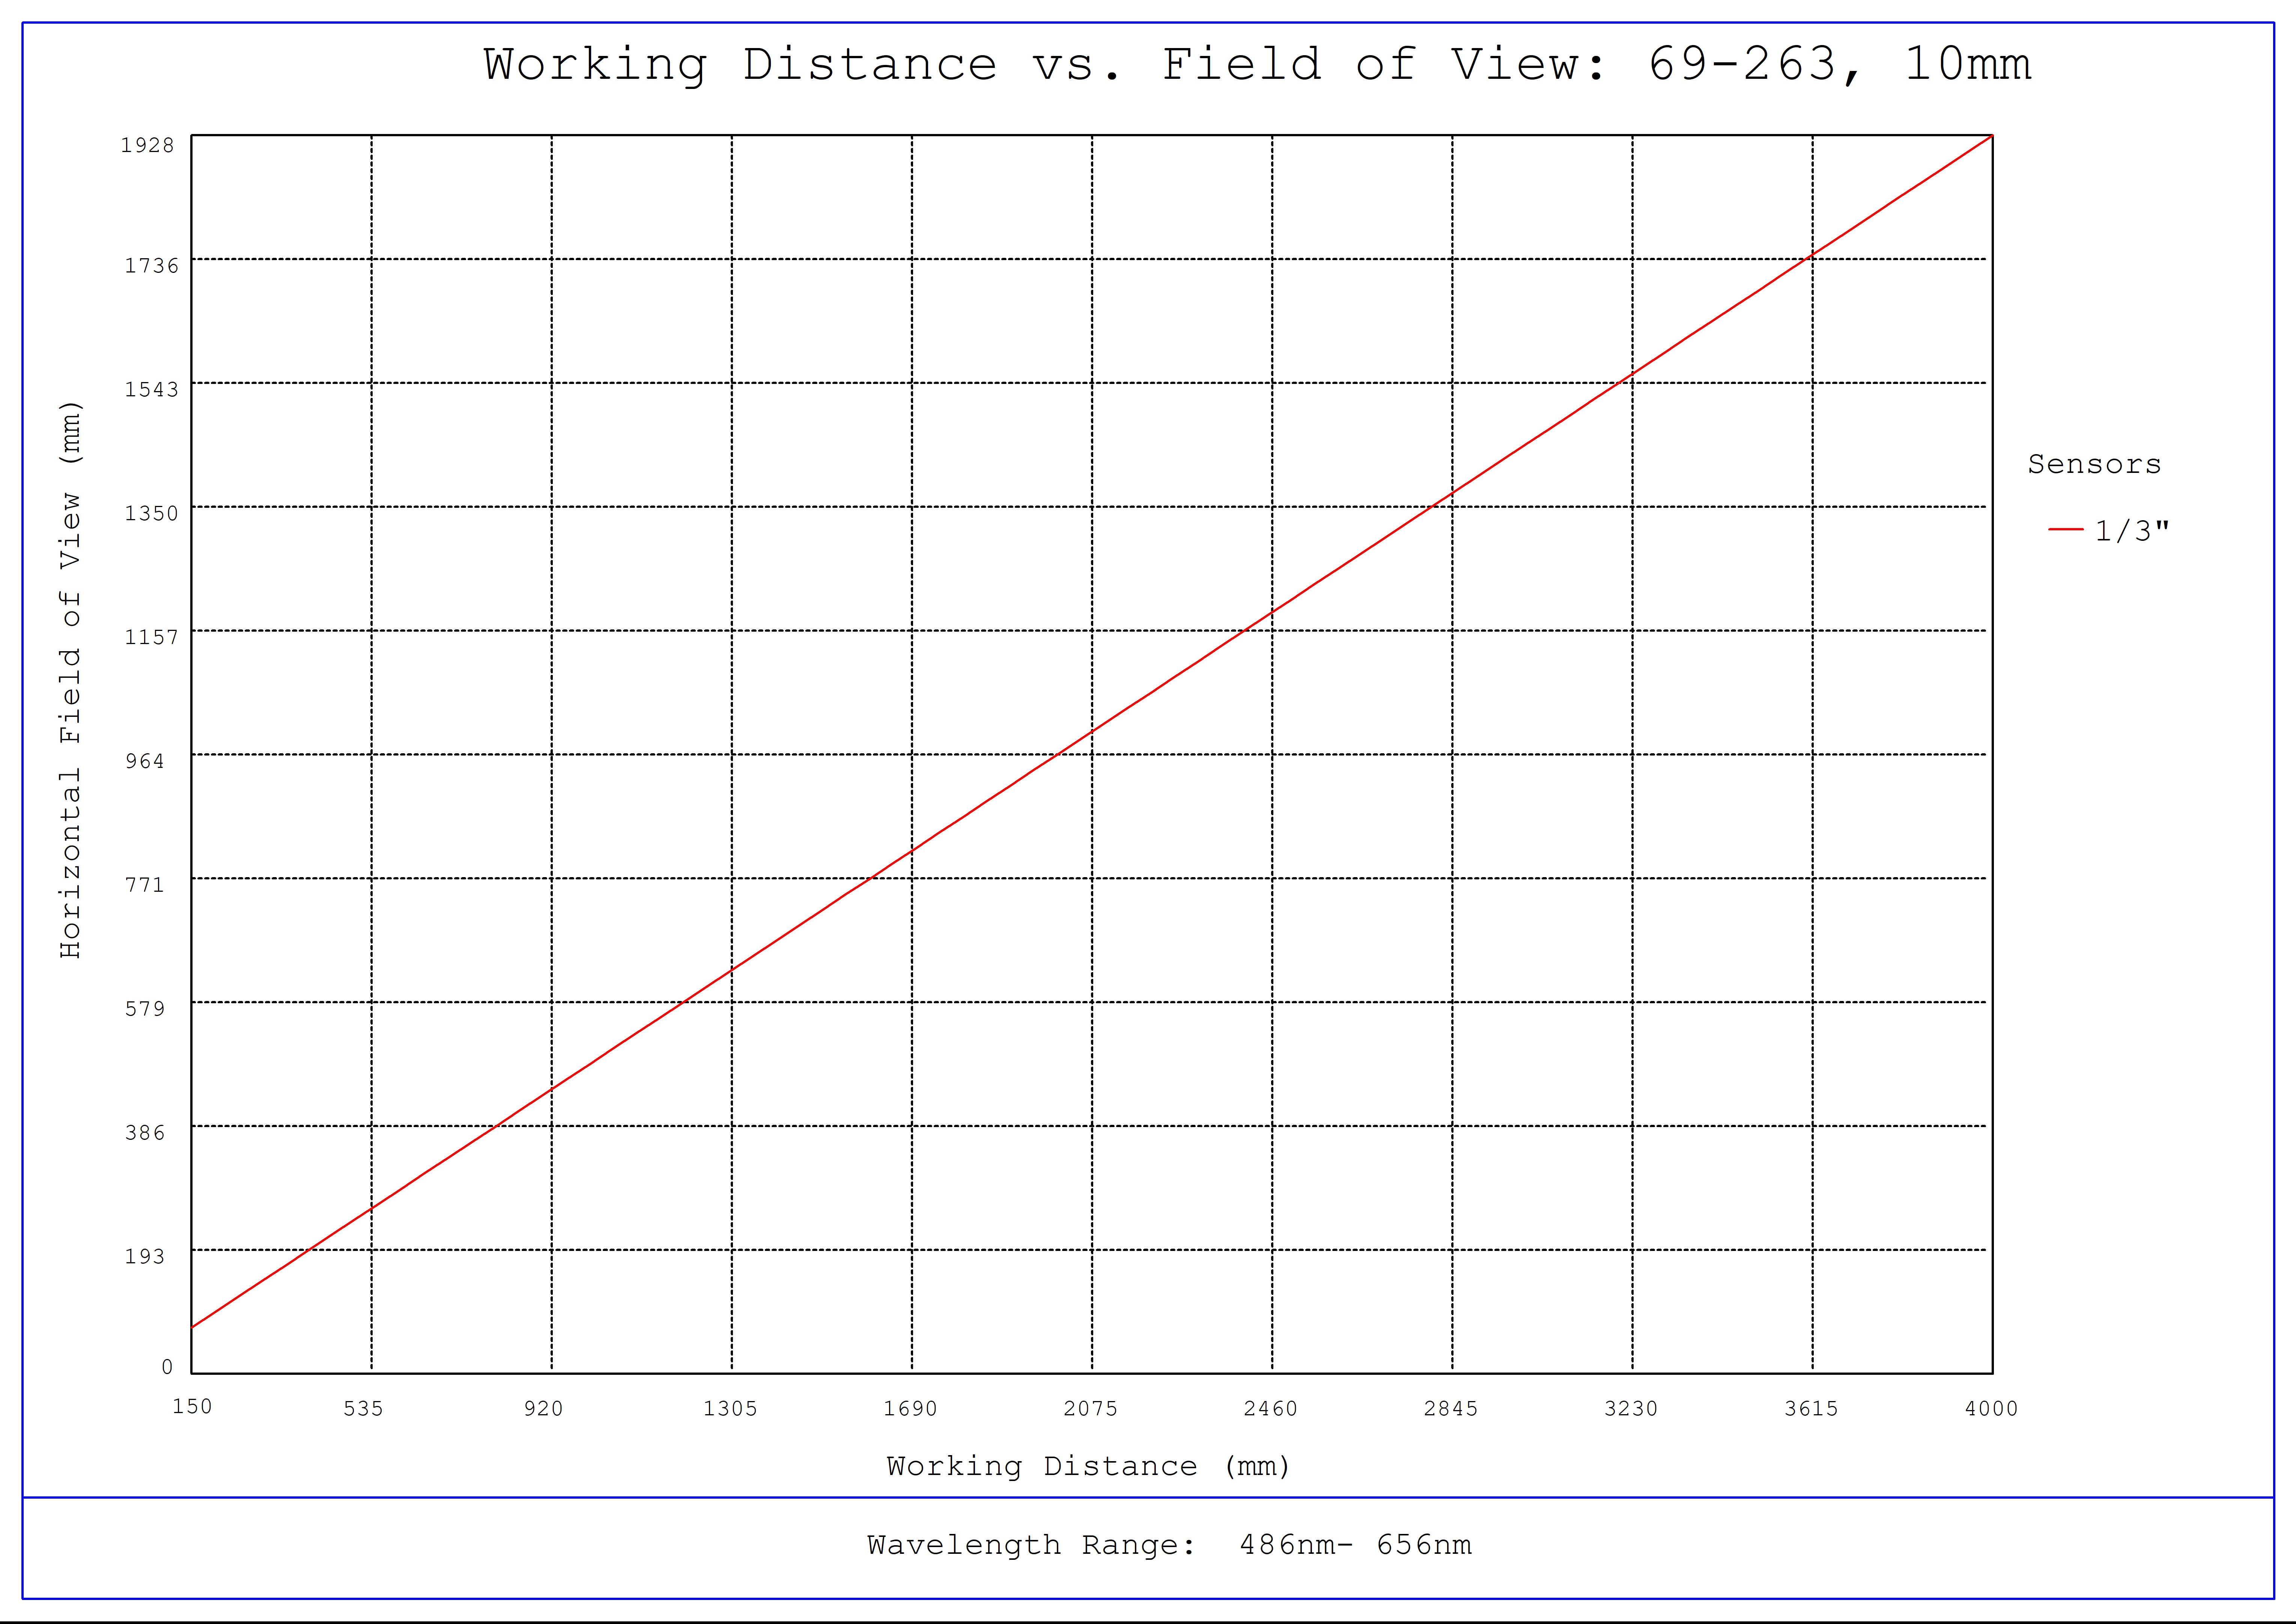 #69-263, 10mm FL f/4, Blue Series M12 Lens, Working Distance versus Field of View Plot